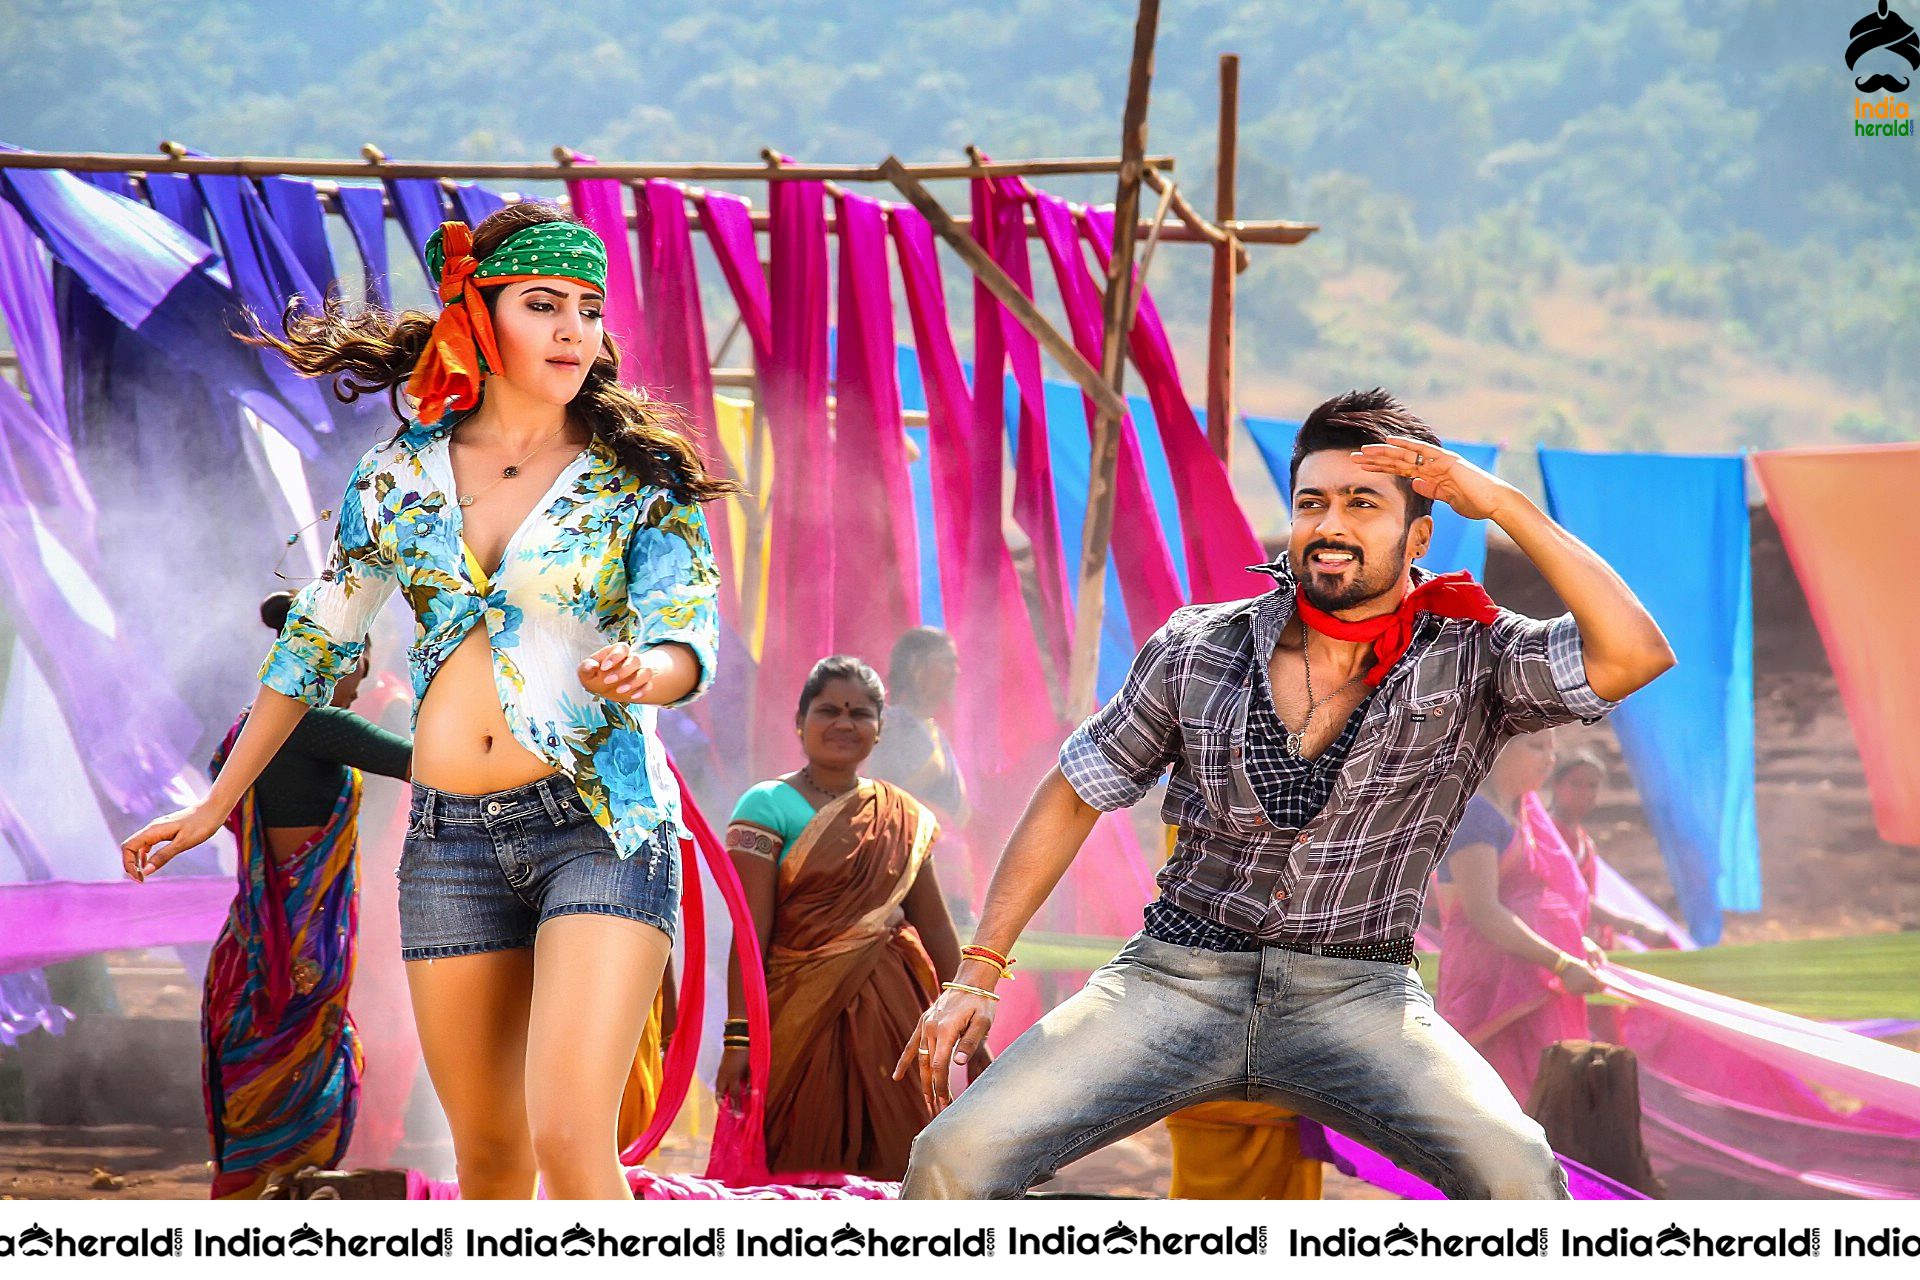 INDIA HERALD EXCLUSIVE Hot Samantha and Surya Unseen Stills from Sikindar Set 6